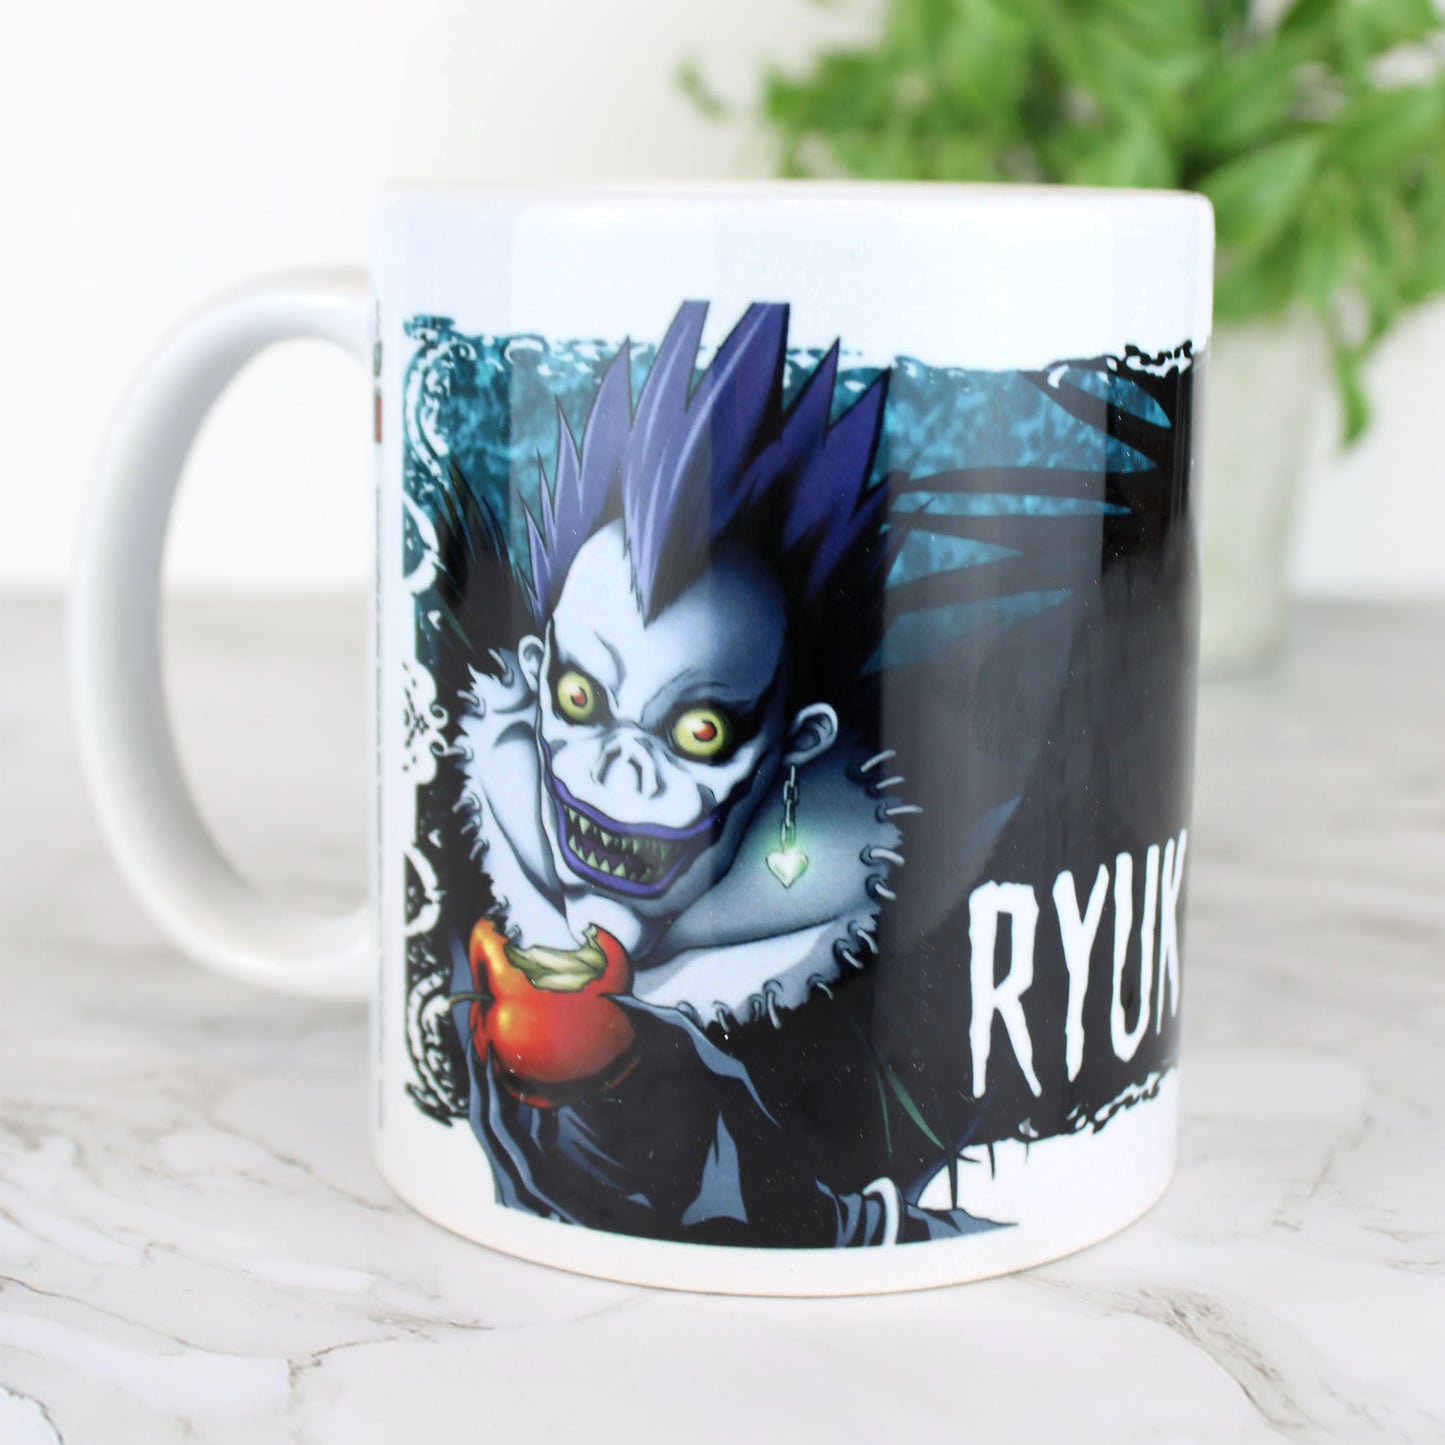 Buy ryuzakimrl a Coffee. /ryuzakimrl - Ko-fi ❤️ Where